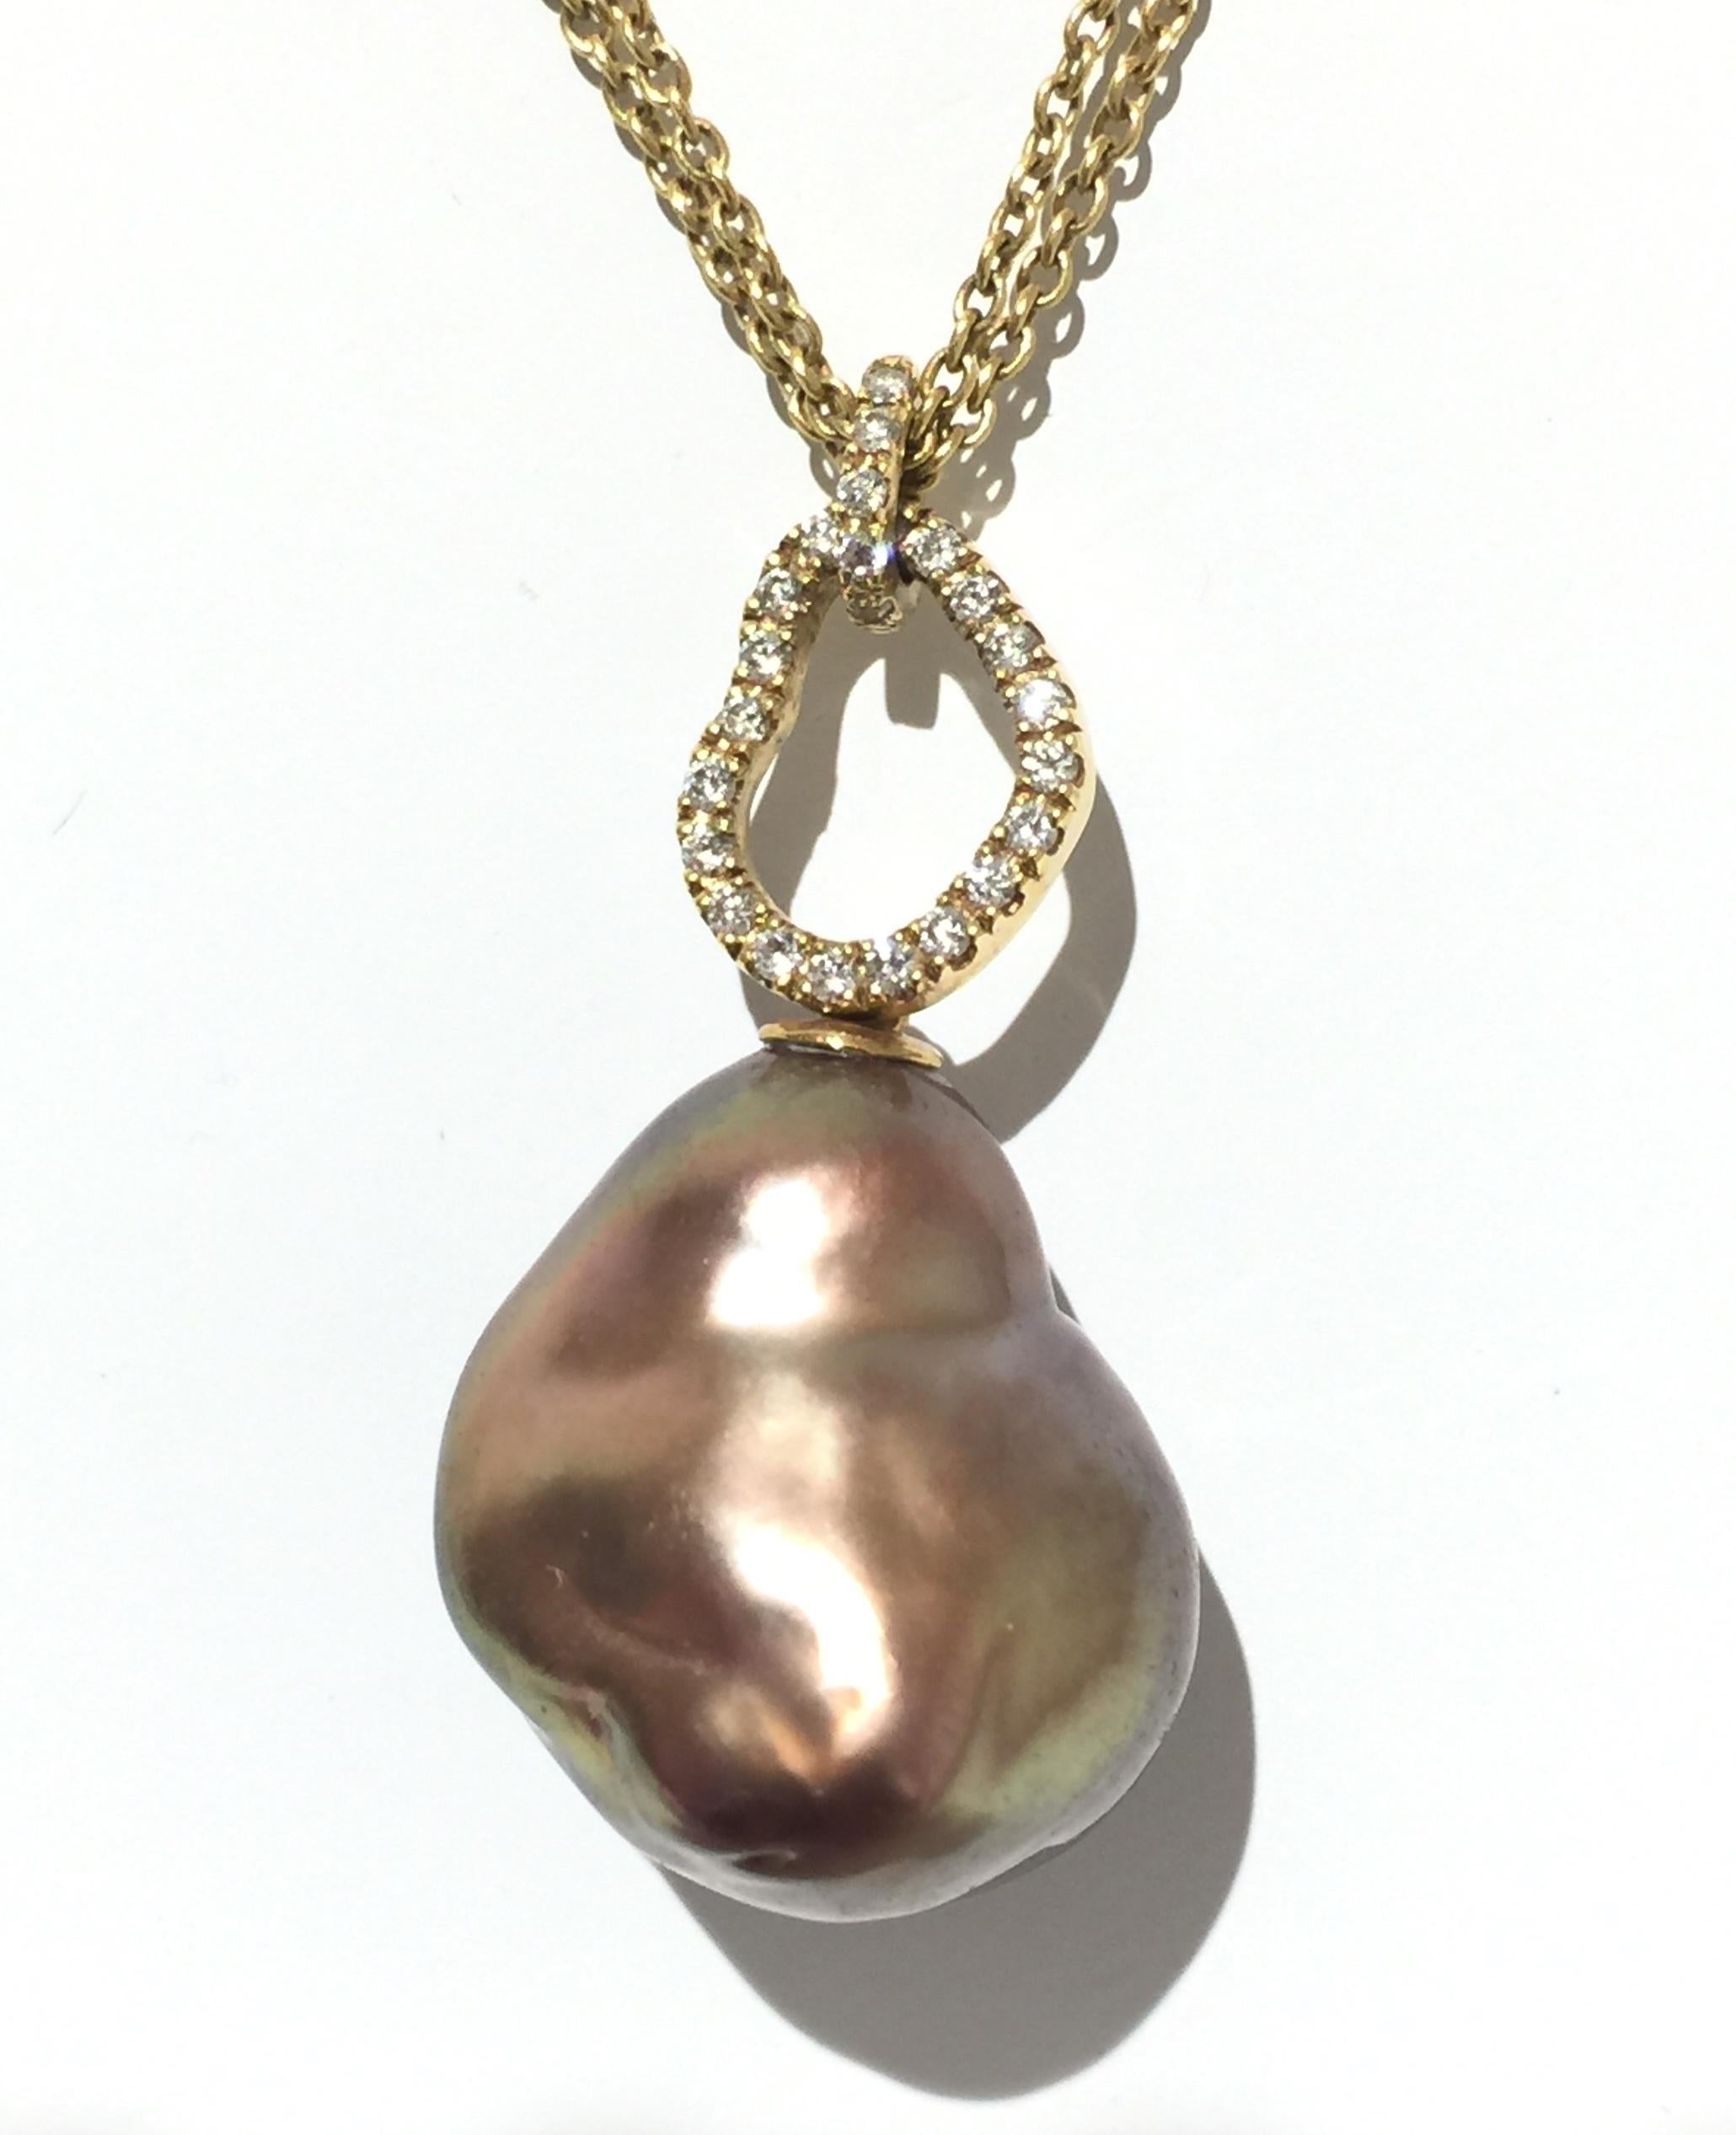 Yvel Pearl and Diamonds Necklace.
18k Yellow gold 
Pearl
Diamonds 0.17ctw
N1BRQBRY